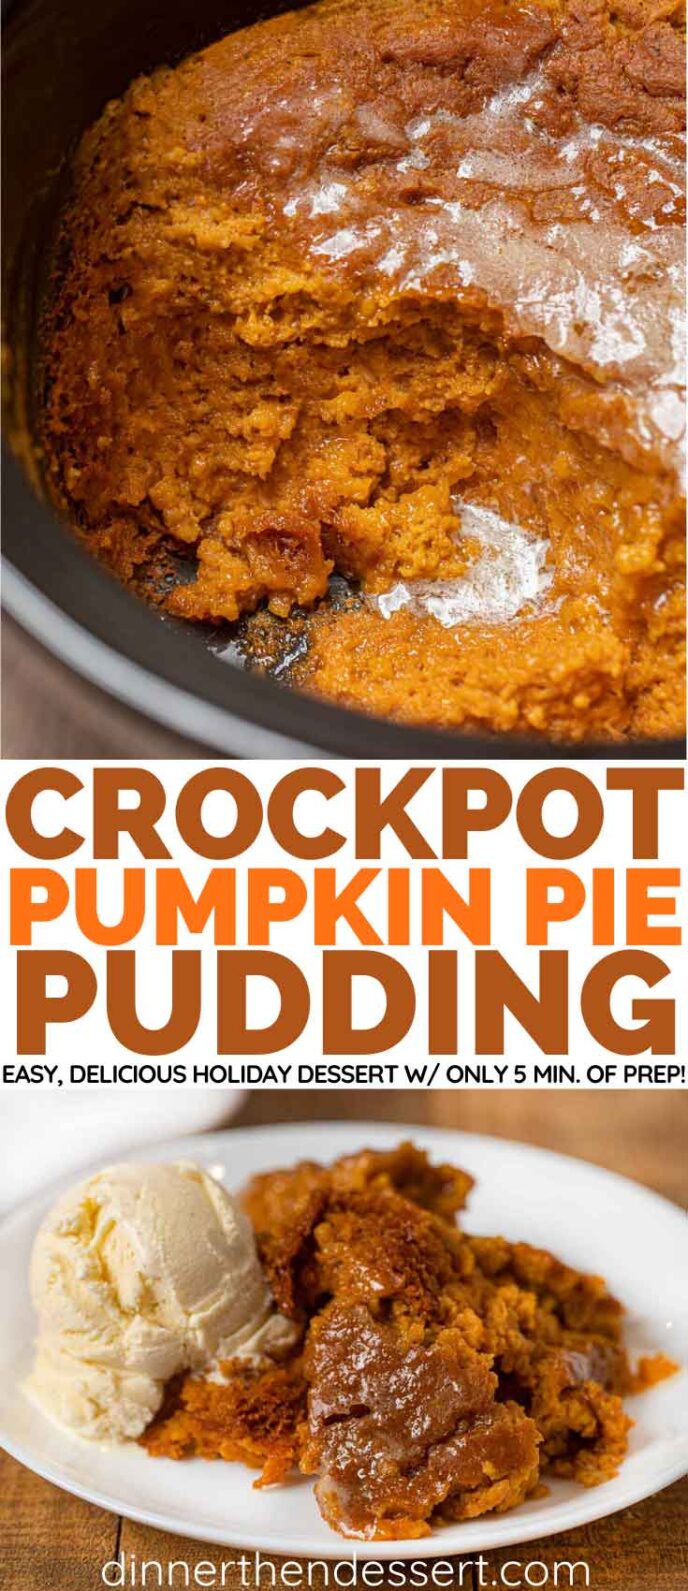 Crockpot Pumpkin Pie Pudding collage